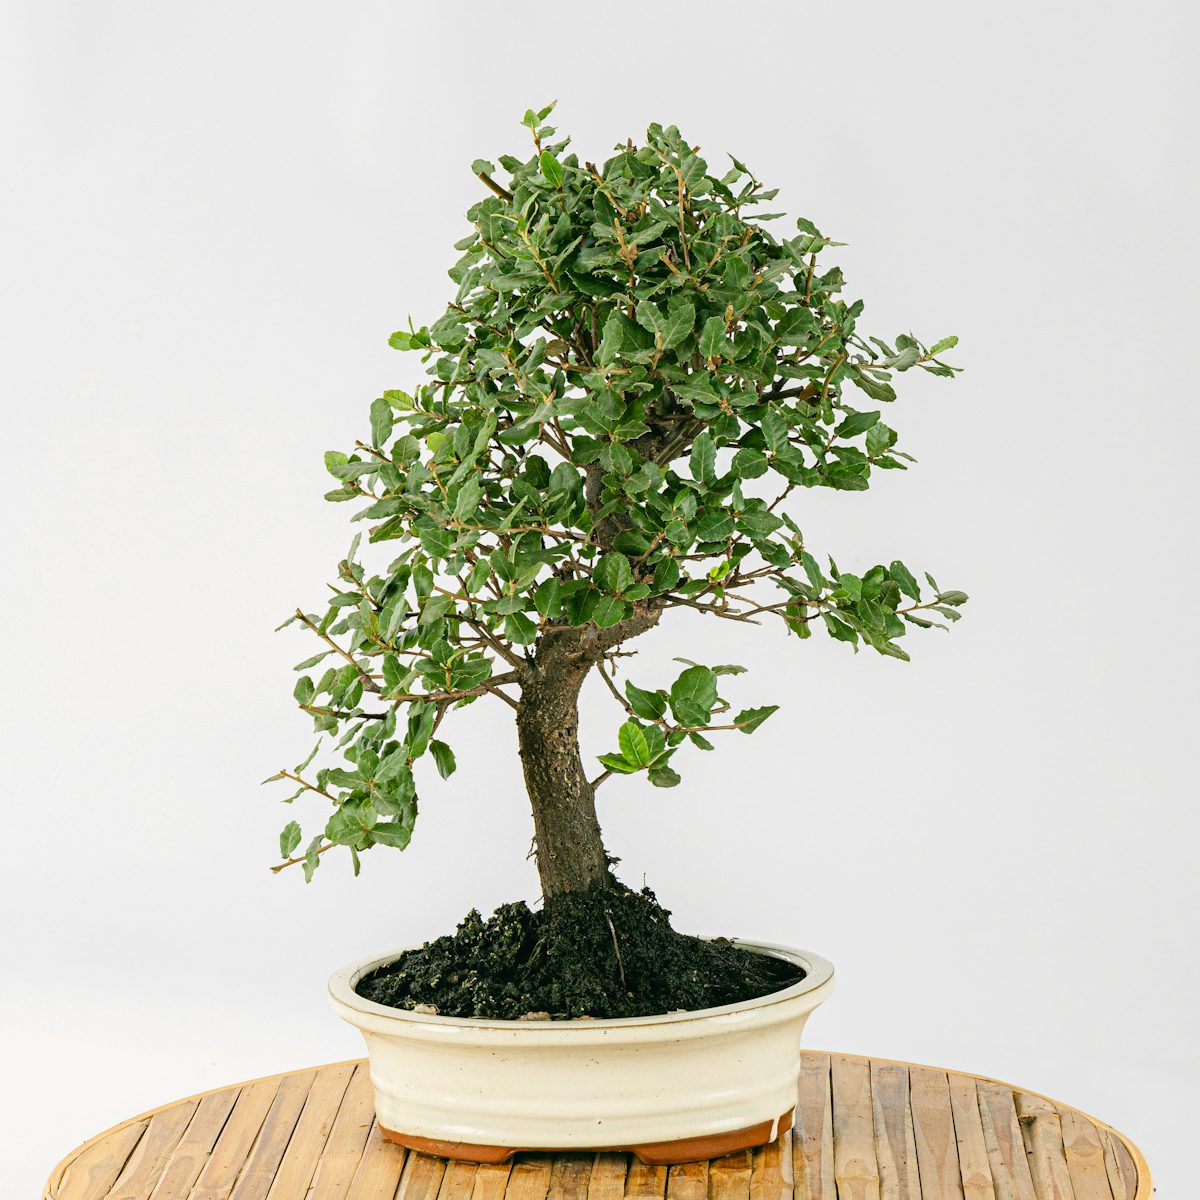 Bonsai 10 Jahre alt Quercus Suber